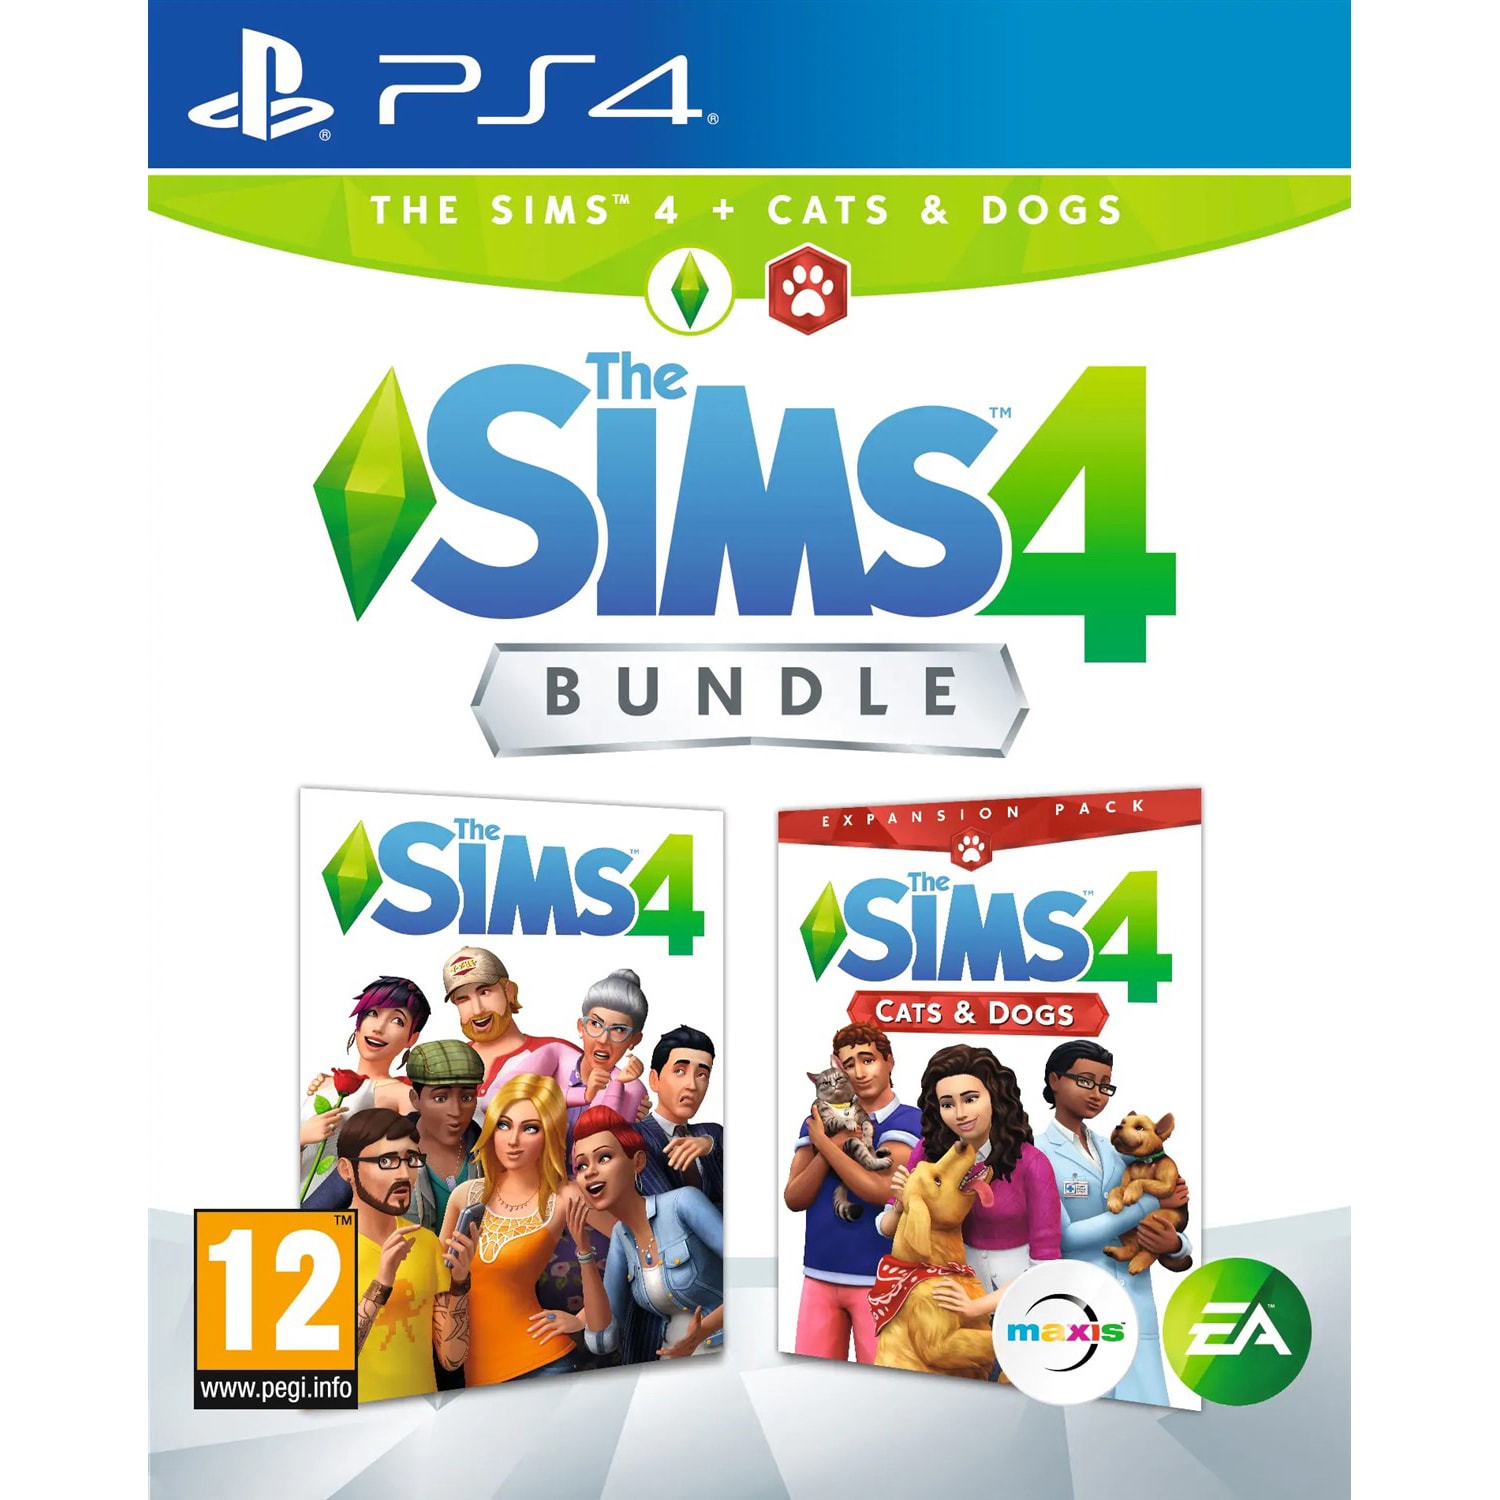 Gepard romersk eksplicit The Sims 4 plus Cats and Dogs bundle - PS4 | Elgiganten